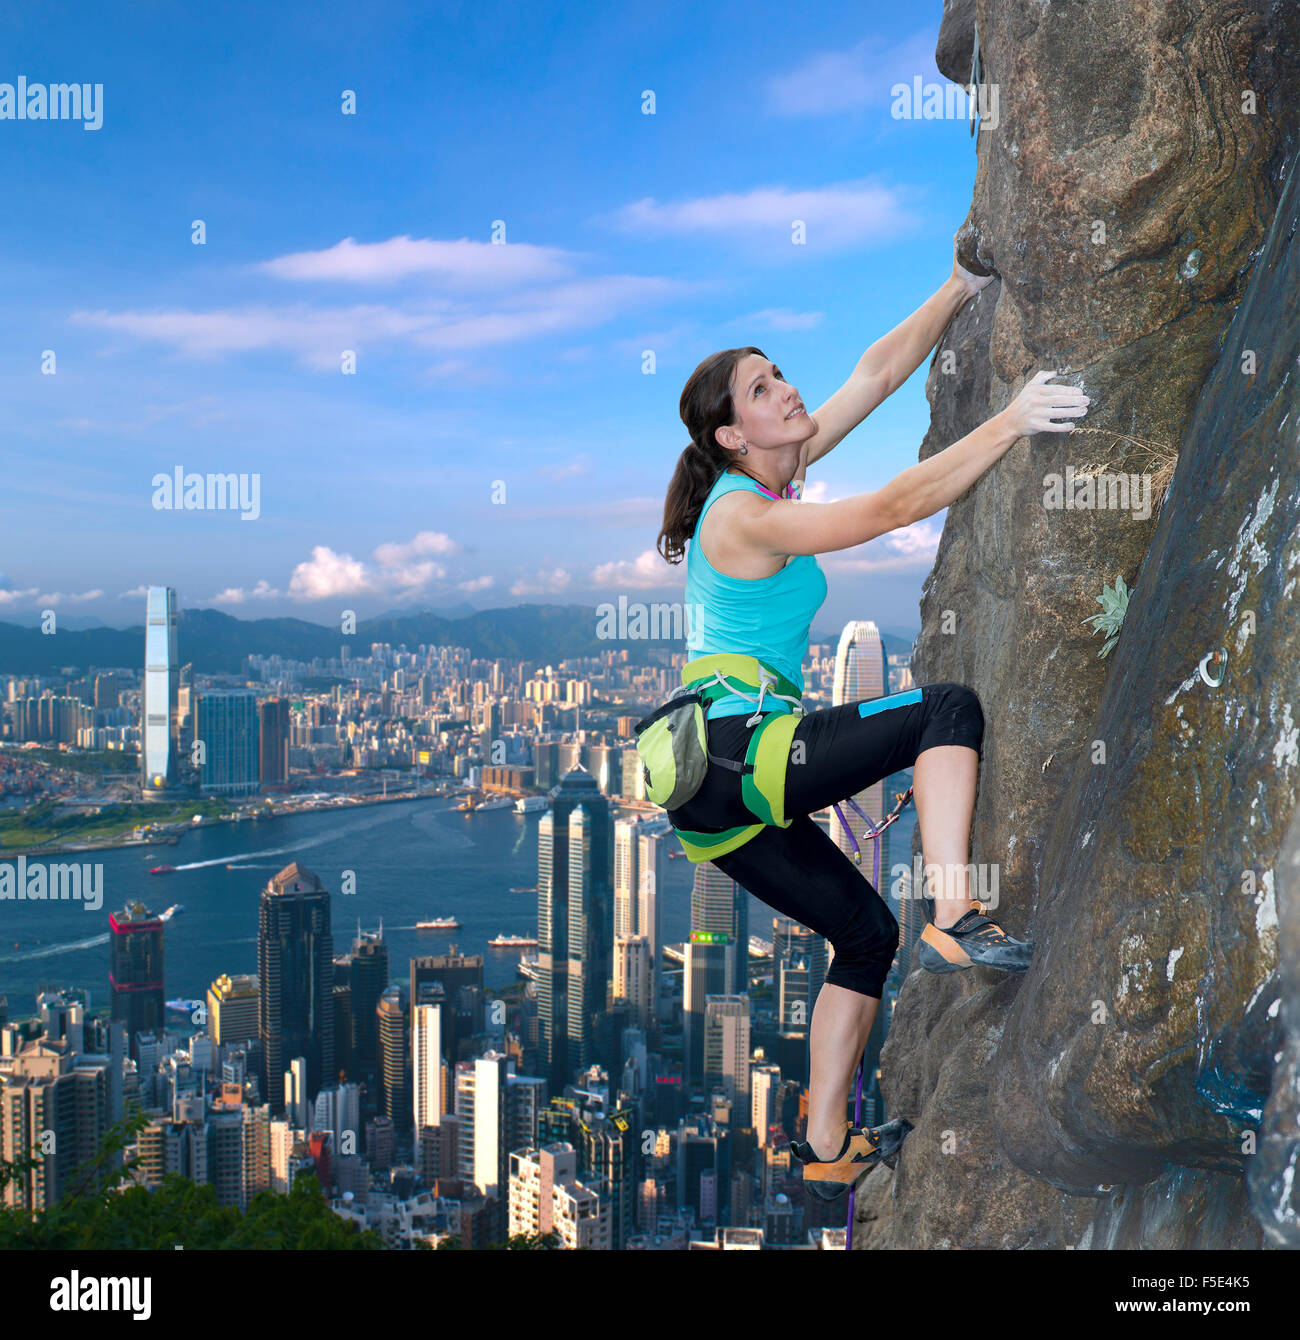 Female rock climber over the city skyline Stock Photo